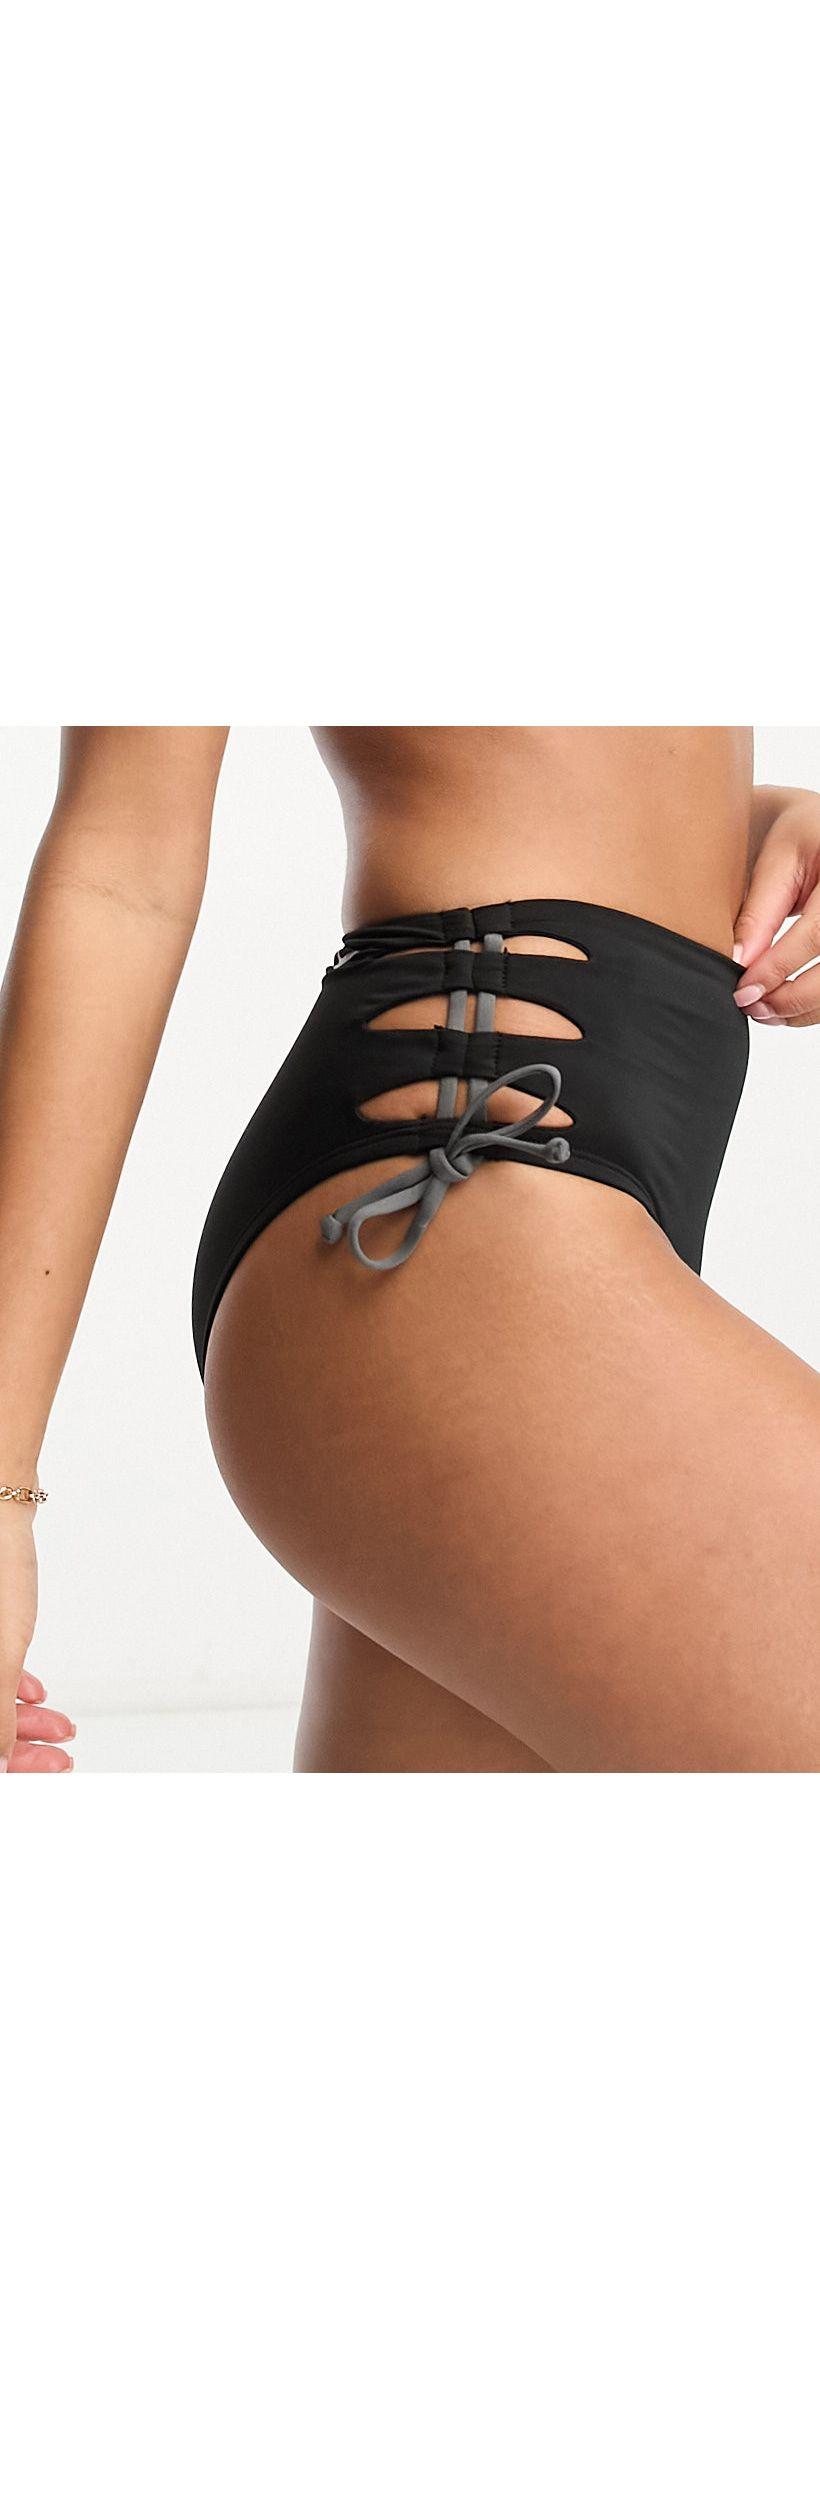 Nike Solid Lace-up High Waist Cheeky Bikini Bottom in Black